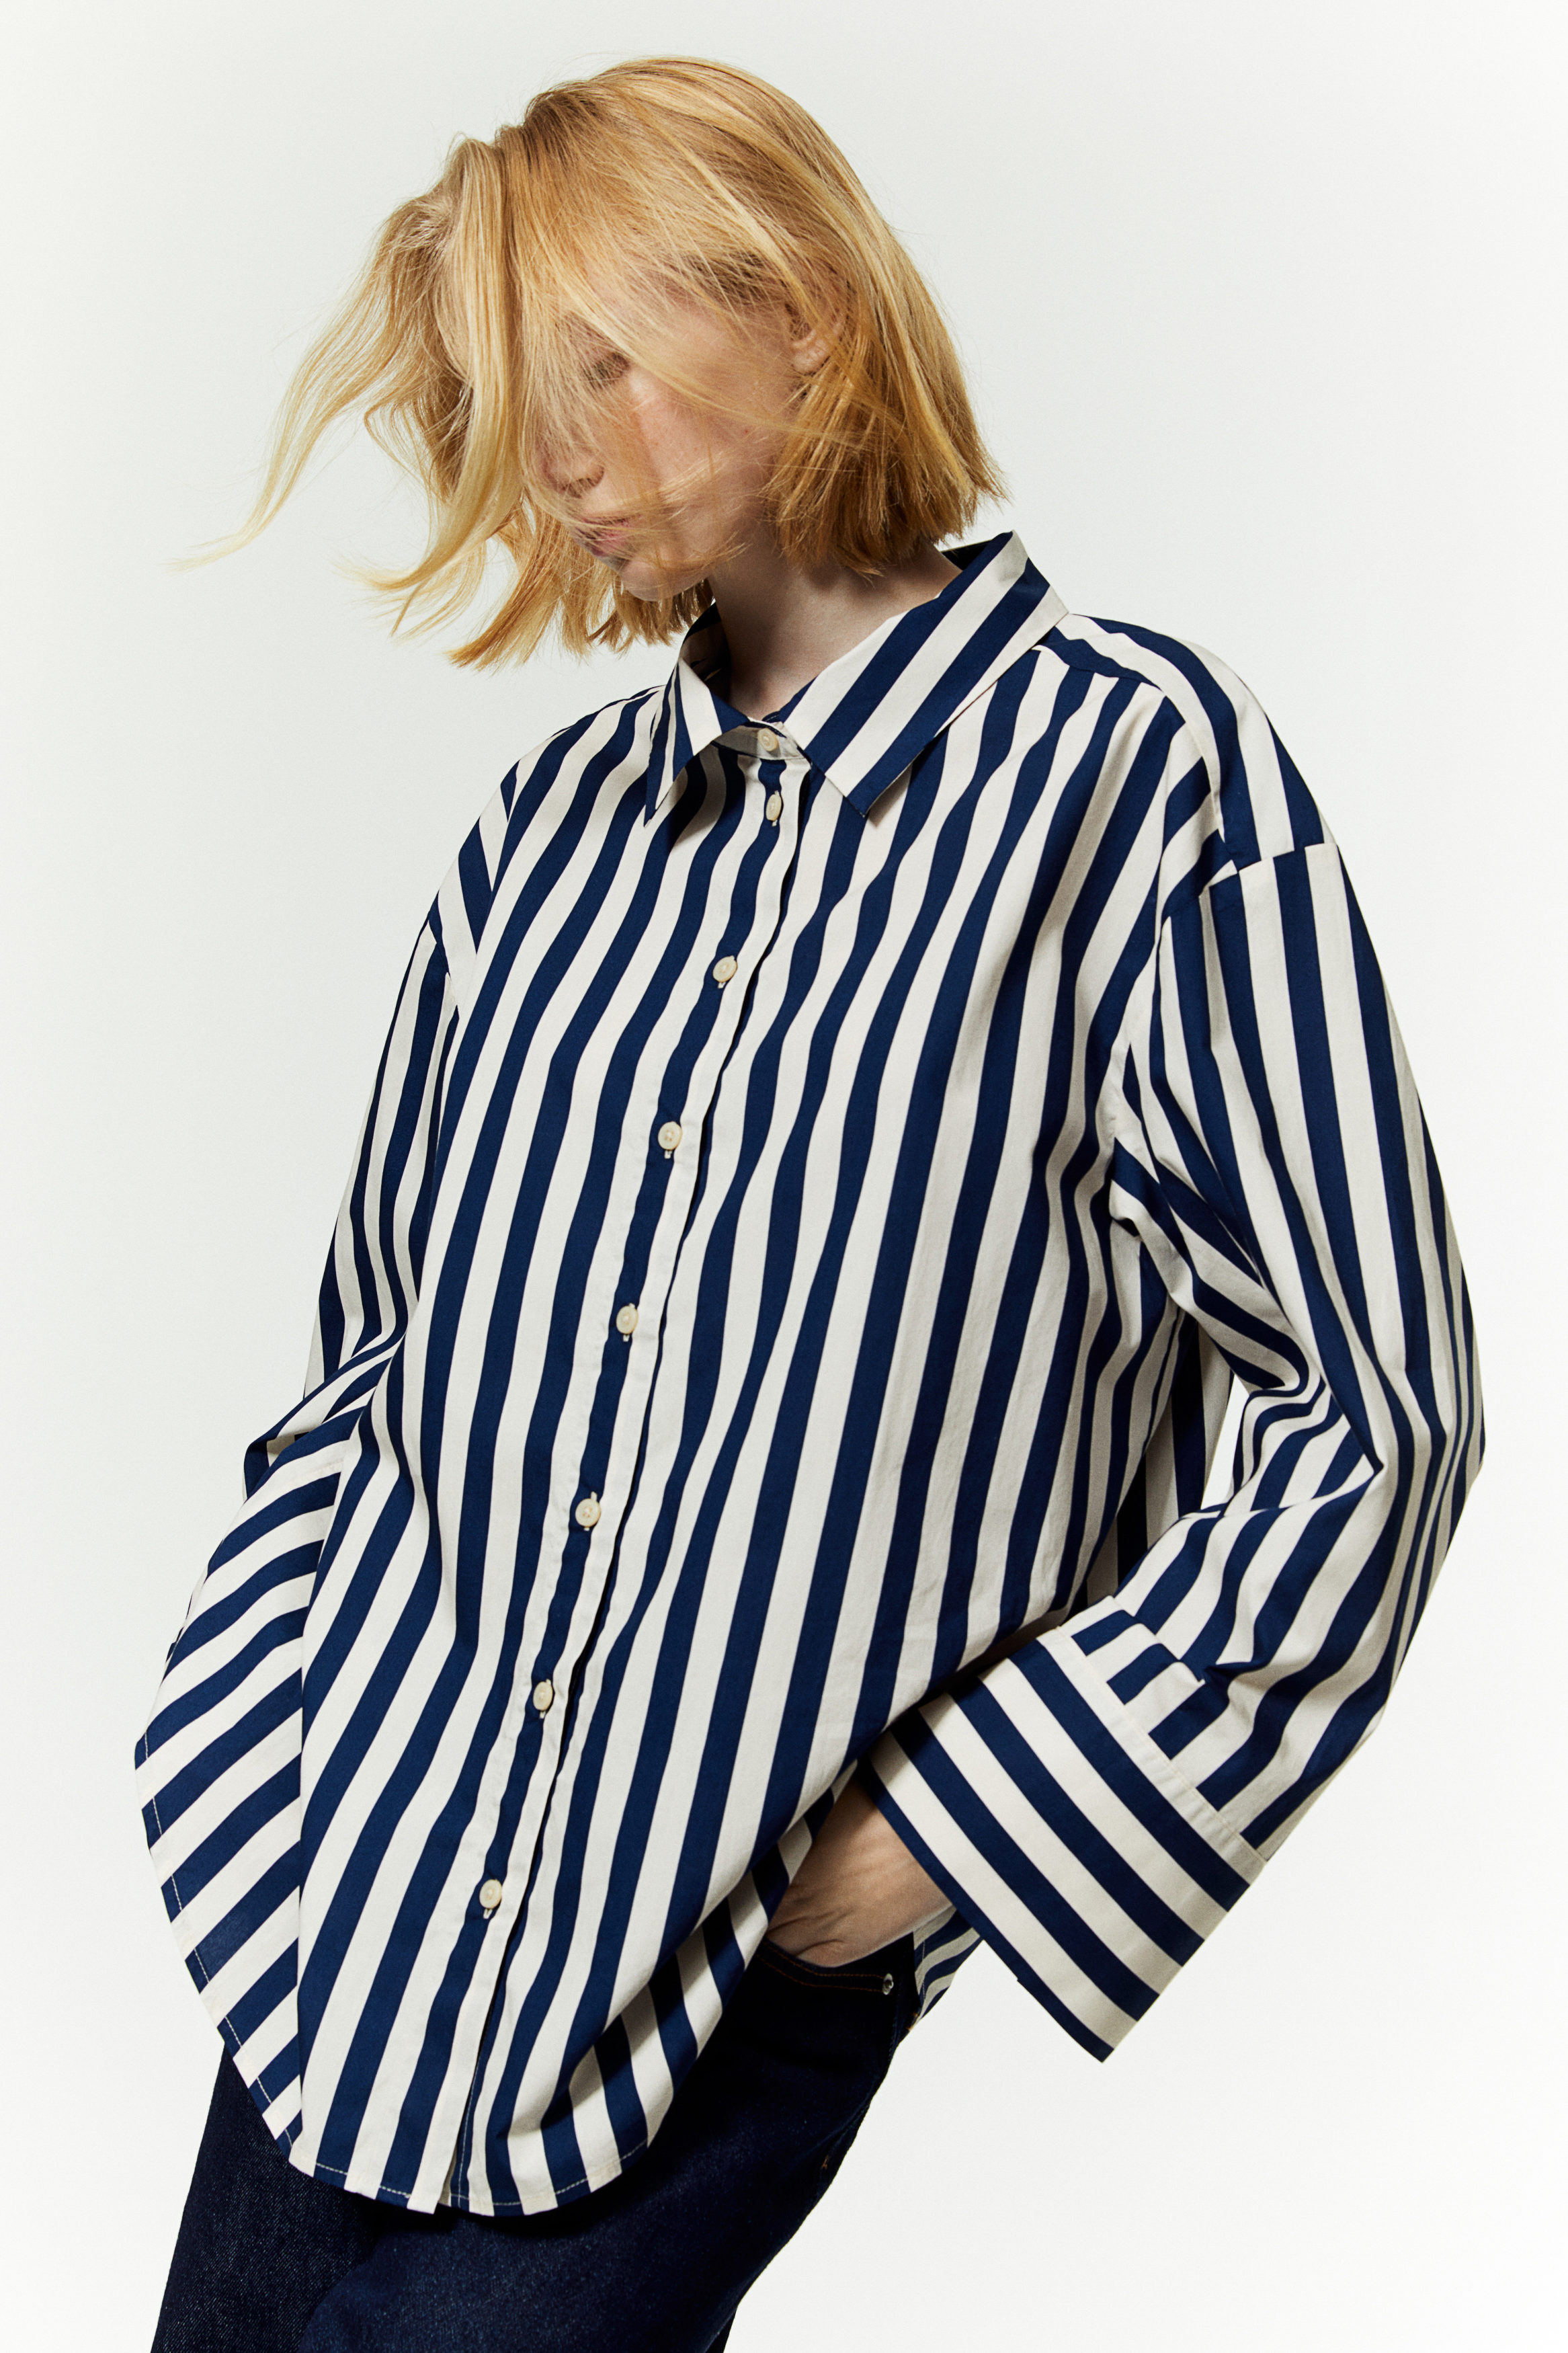 Buy Striped cotton shirt online in KSA